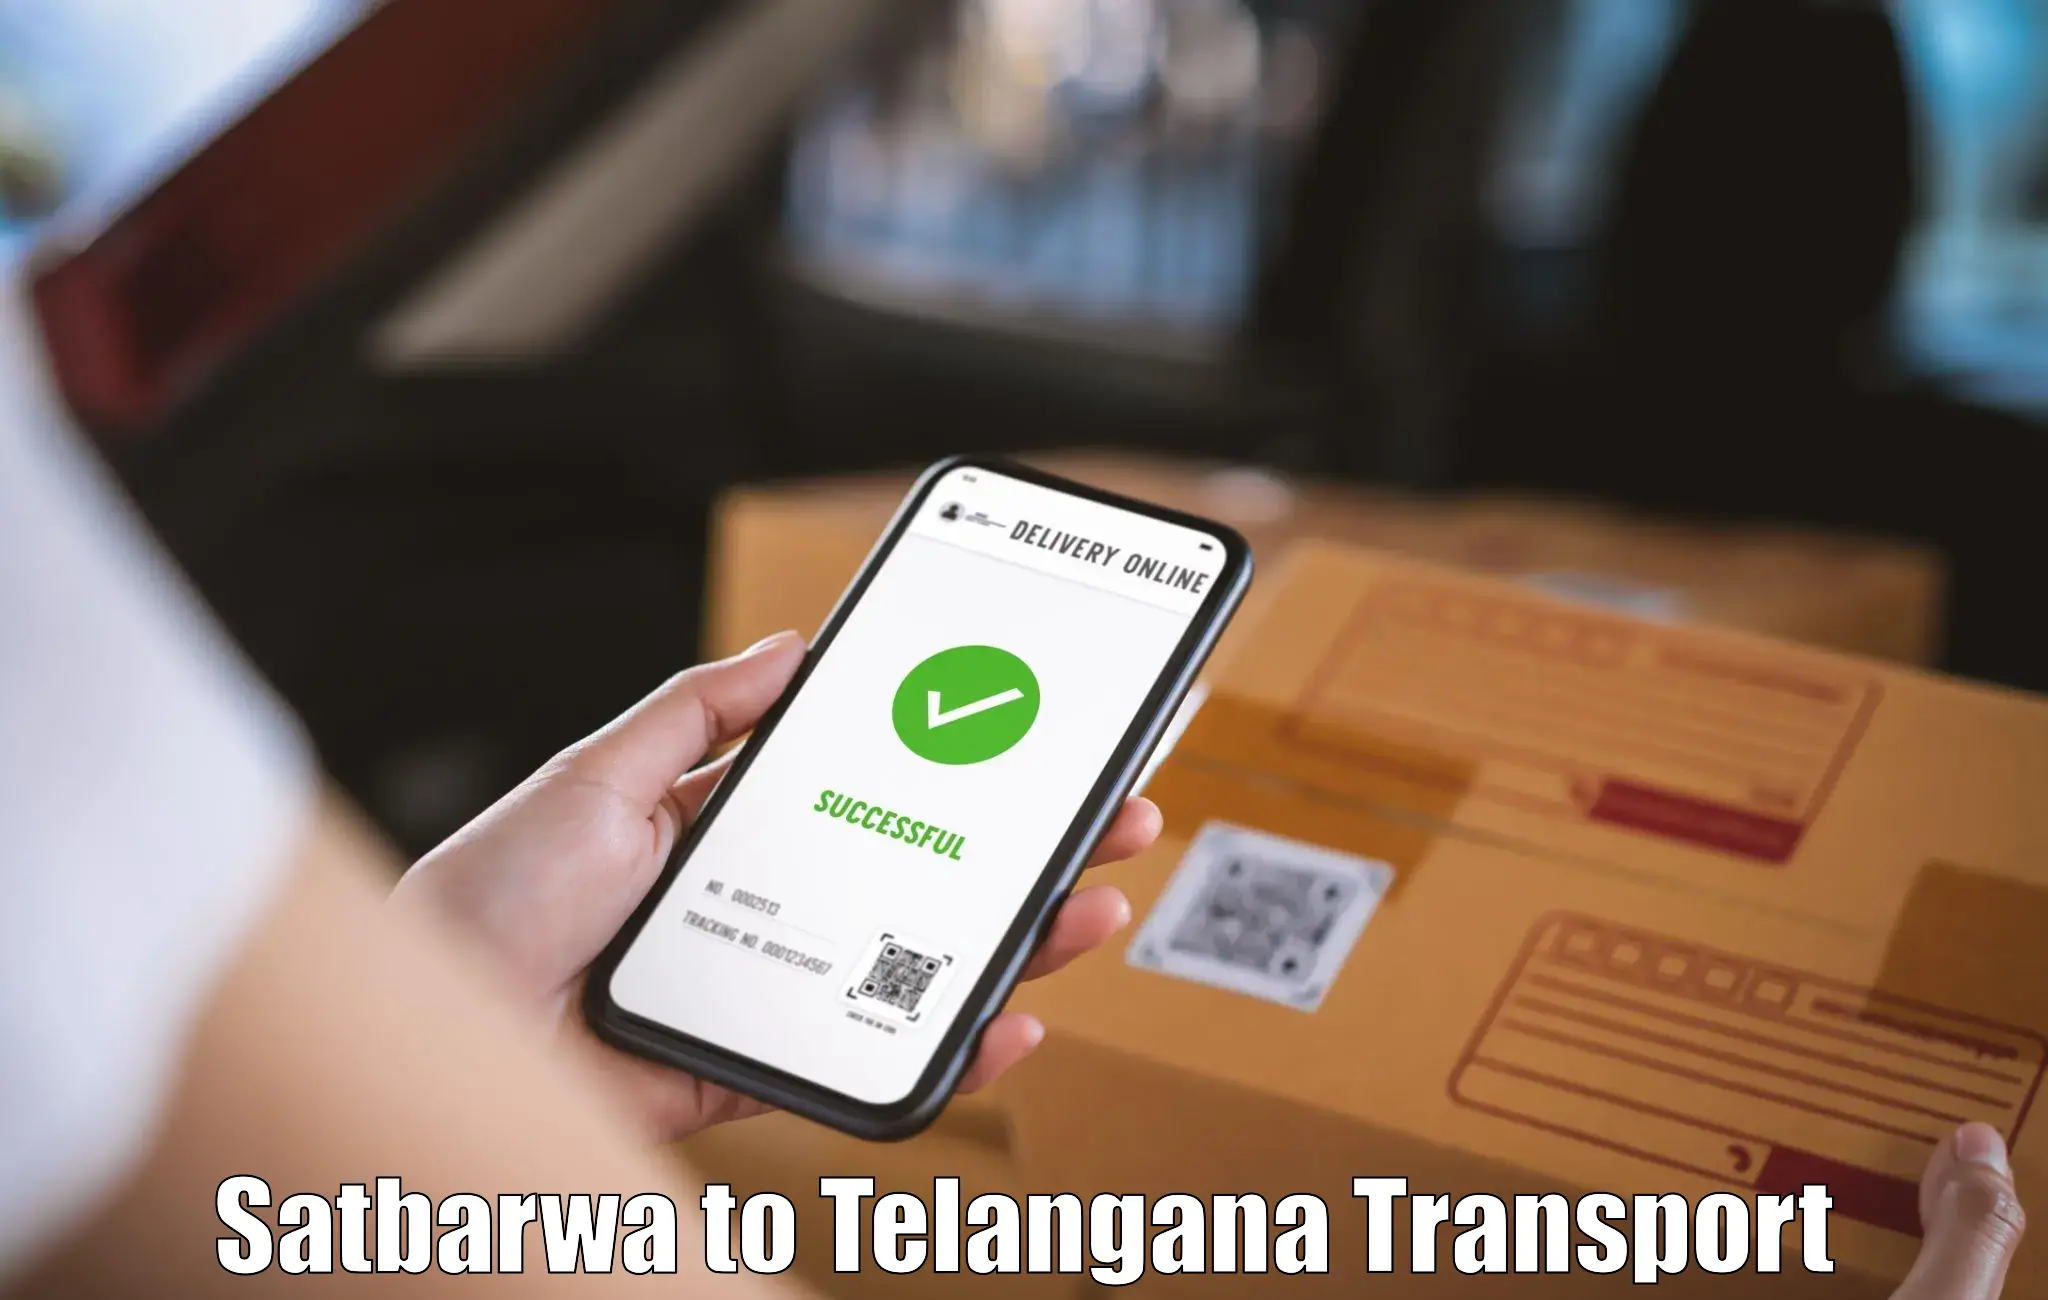 Shipping partner Satbarwa to Manopad